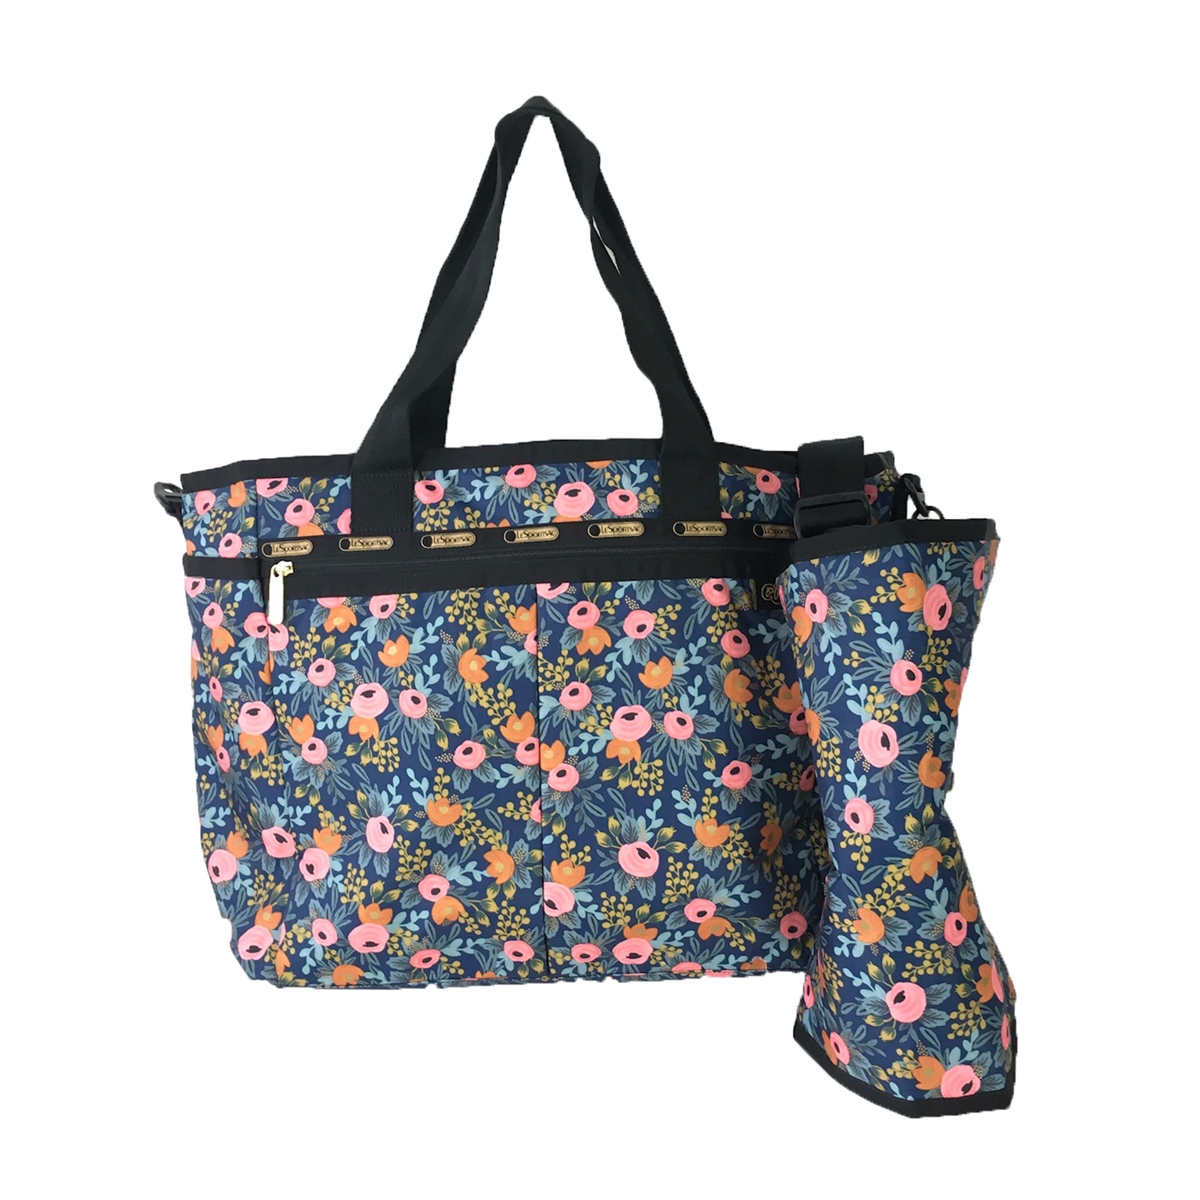 Vera Bradley Uptown Baby Diaper Tote Bag, Exotic Floral Grid Multi